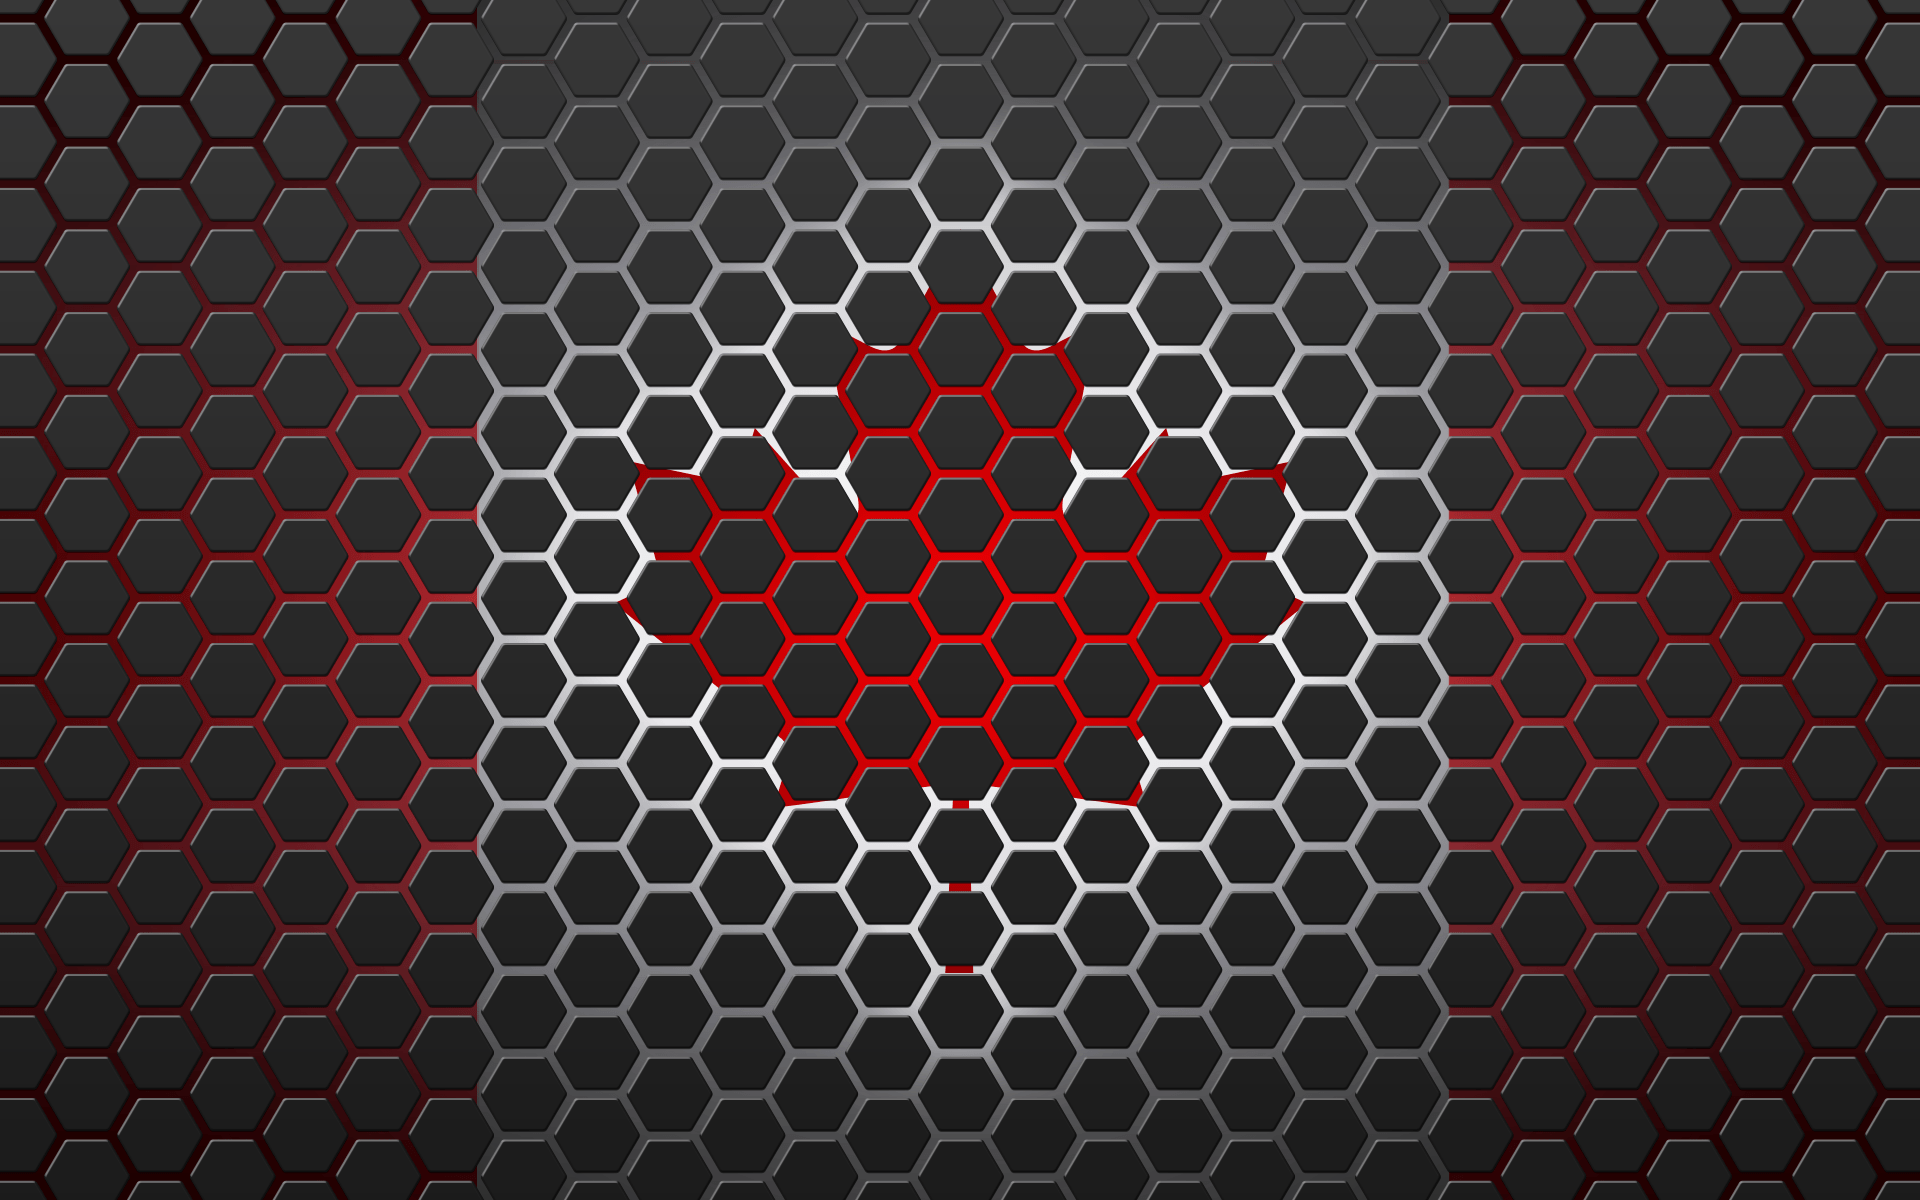 Canada Flag HEX (Hexagon) Wallpaper HD Wallpaper. Background